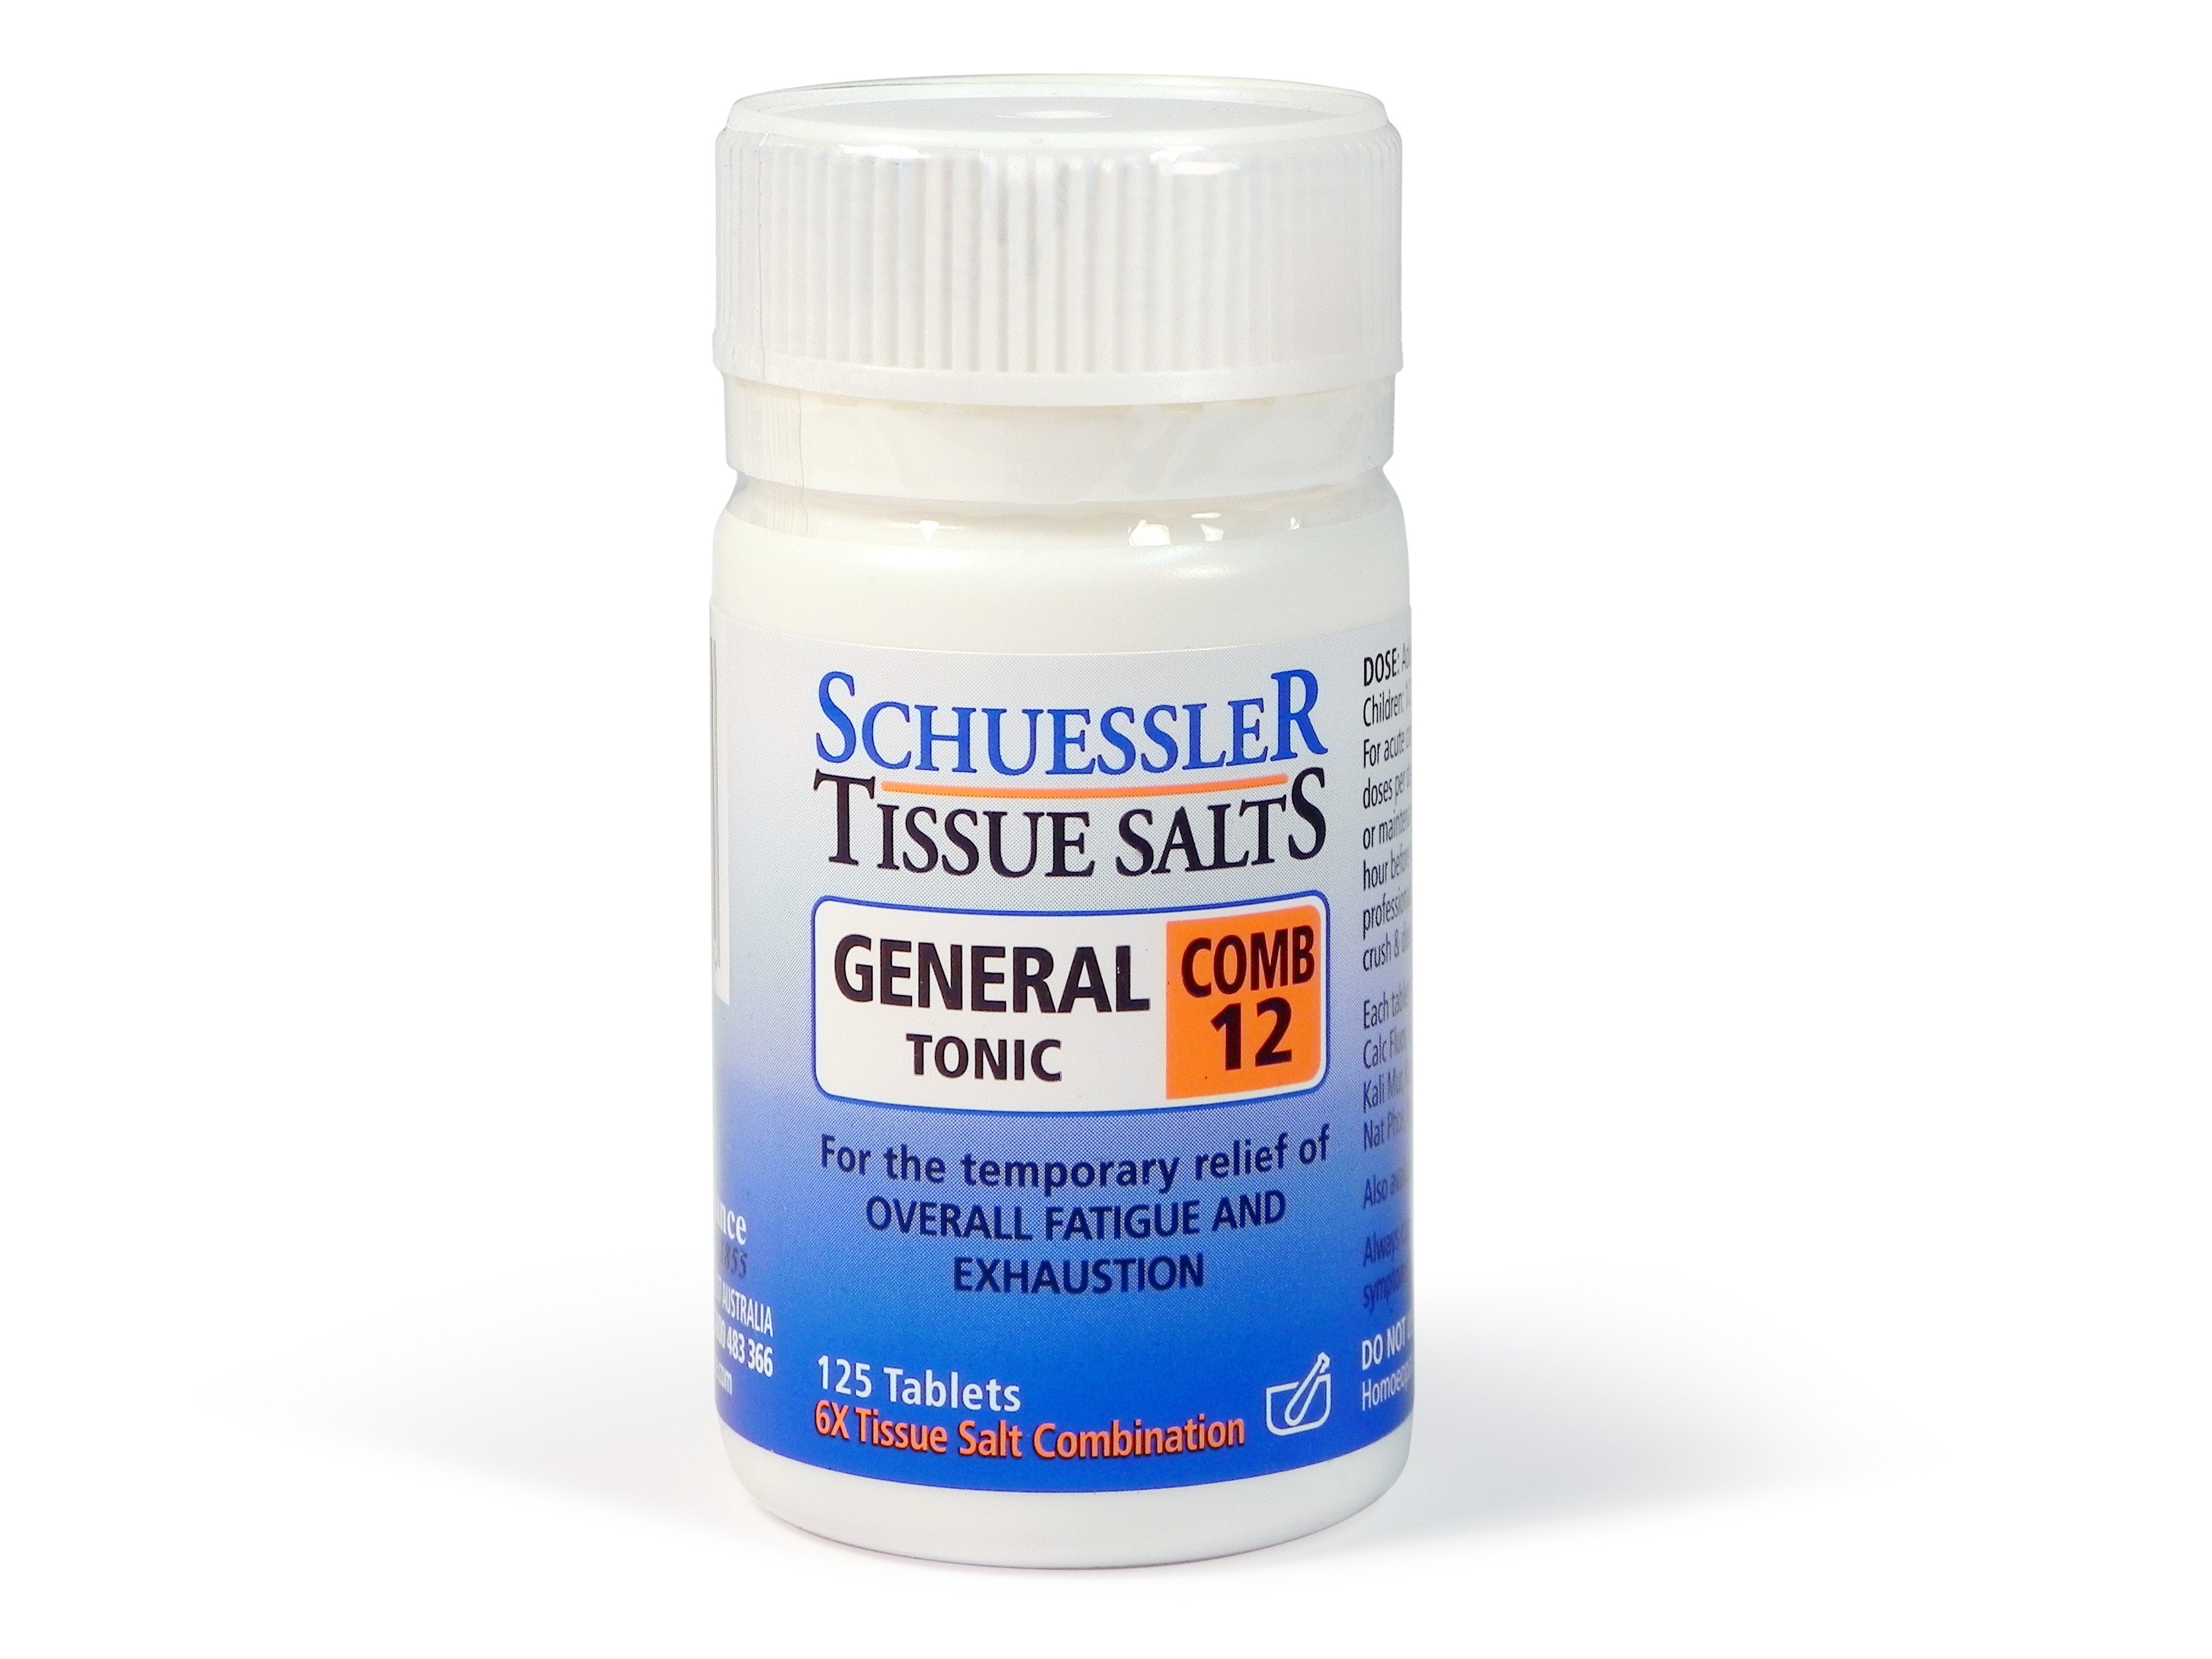 Schuessler Tissue Salts - Comb 12